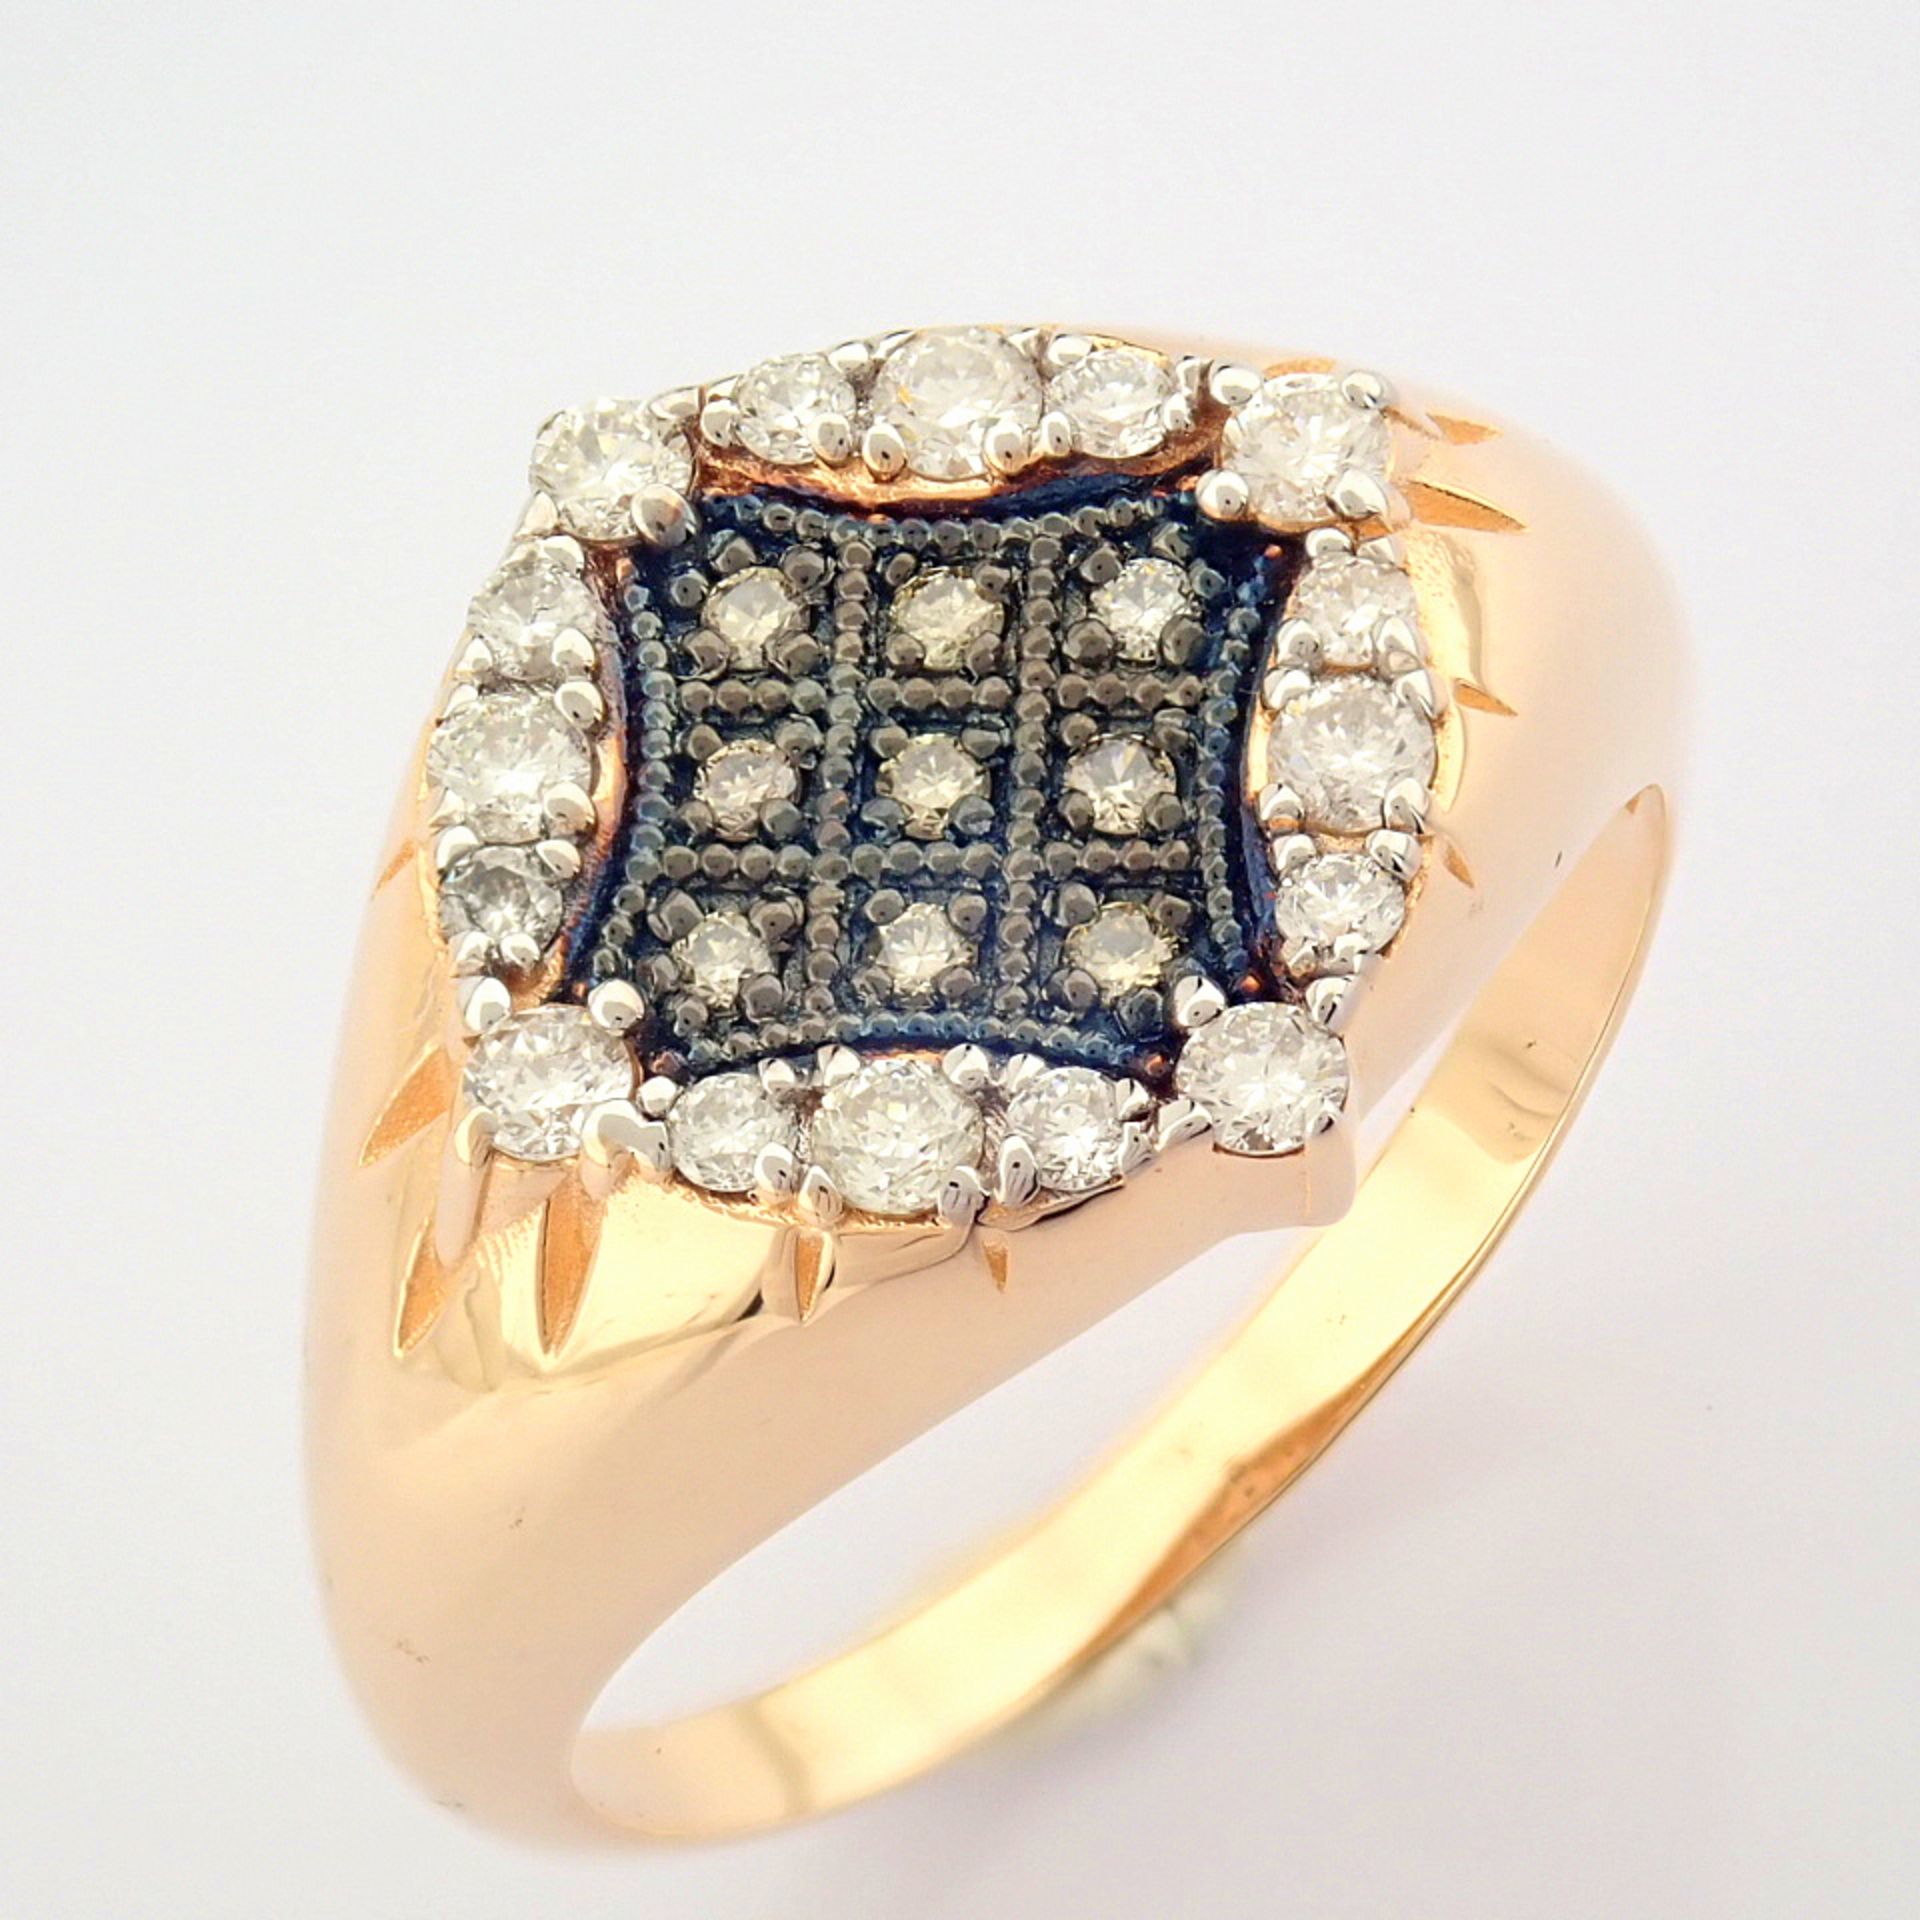 Certificated 14K Rose/Pink Gold Diamond & Brown Diamond Ring (Total 0.38 ct Stone) - Image 2 of 7